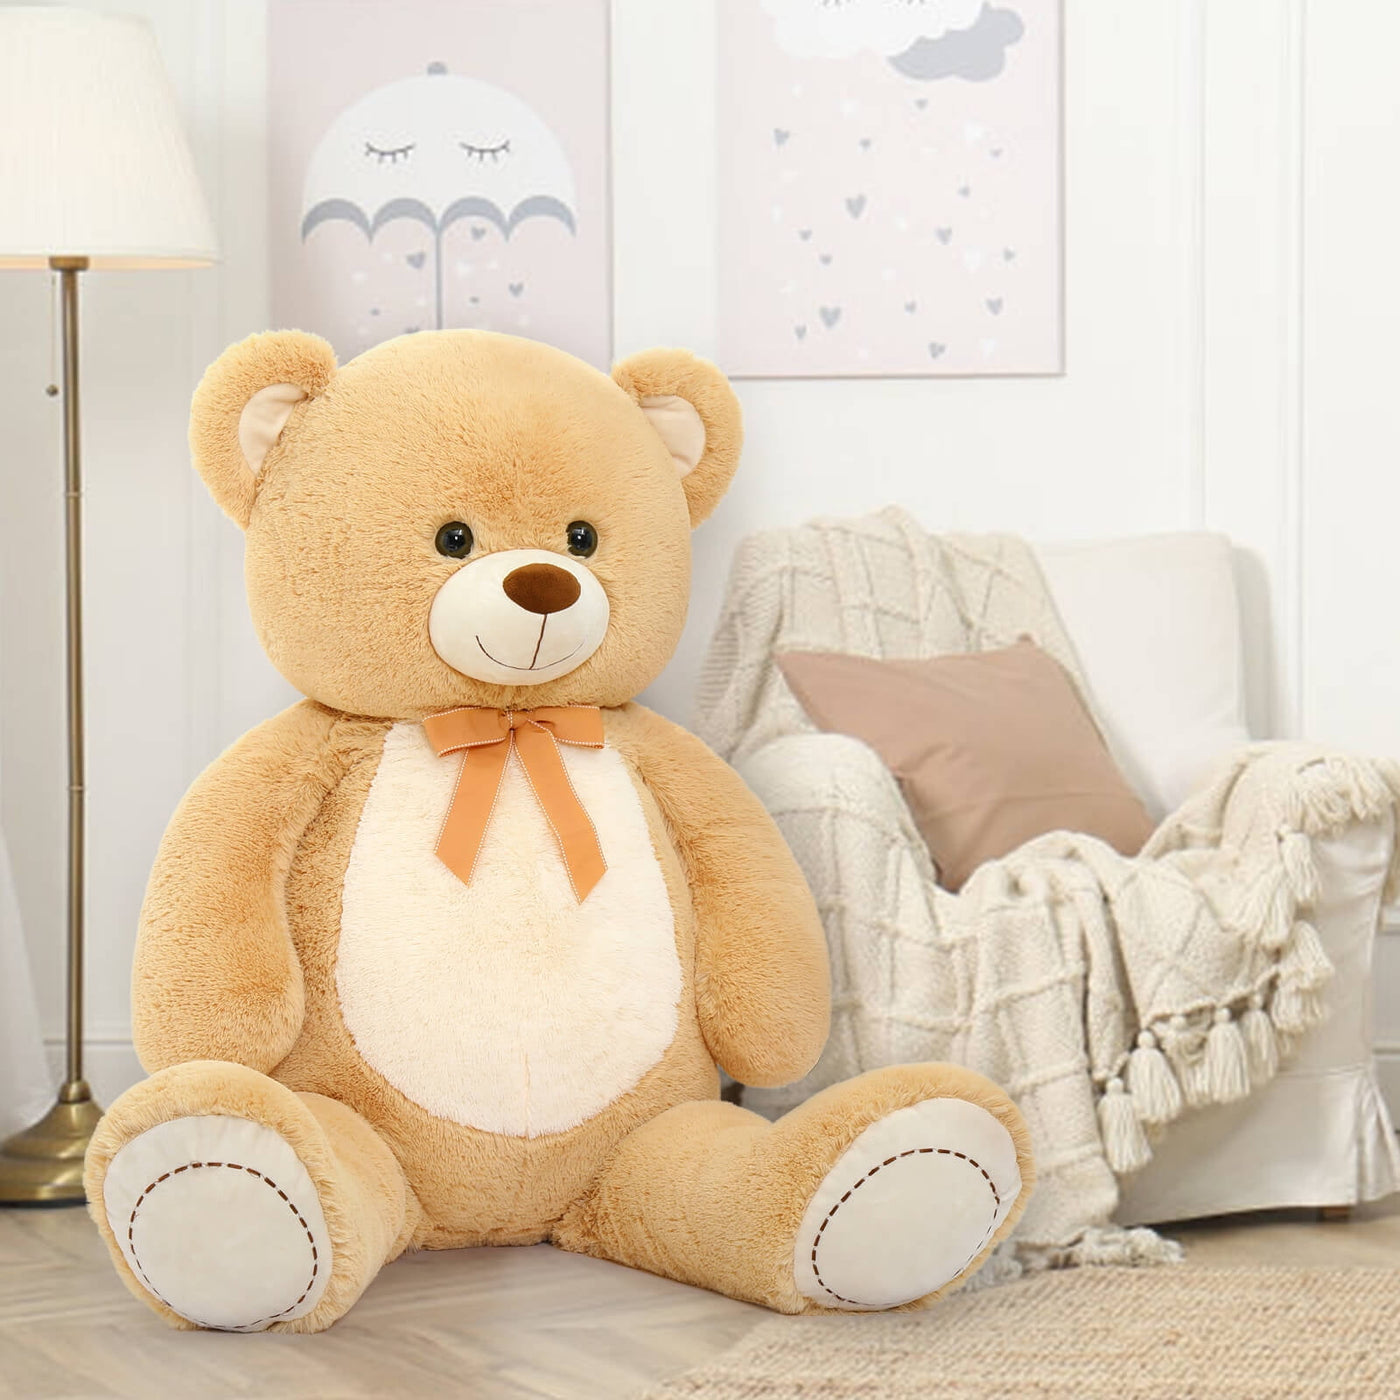 MorisMos 4.3ft Jumbo Teddy Bear Stuffed Animal Stuffed Giant Teddy Bear Plush Toy